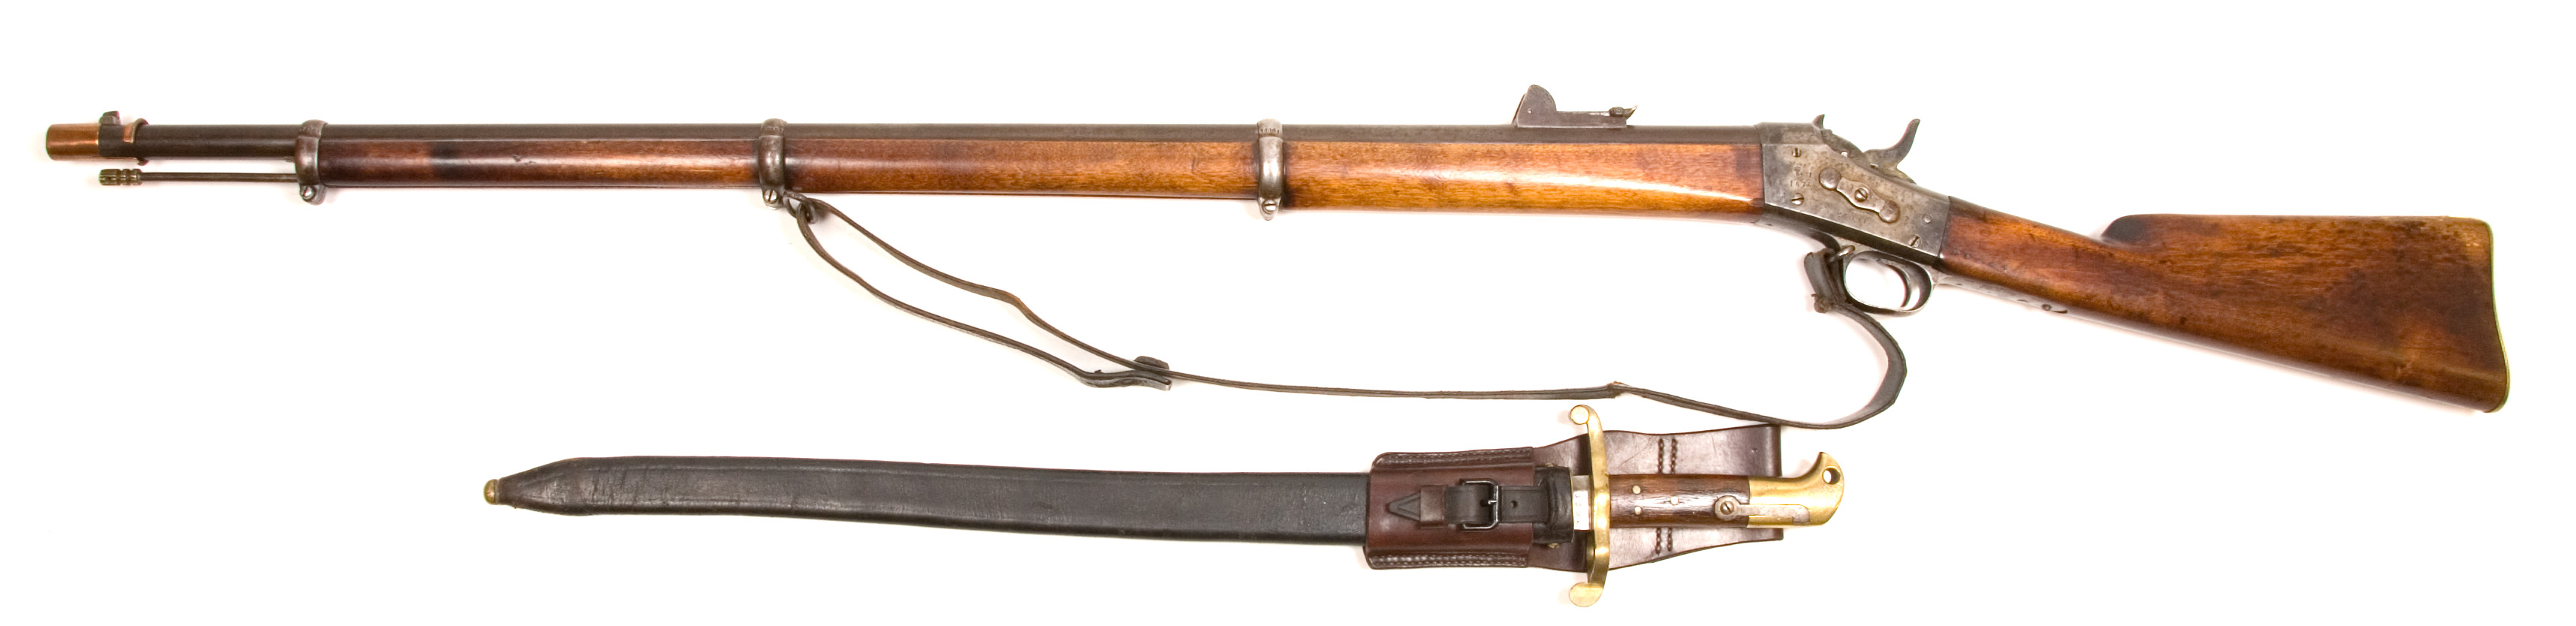 ./guns/rifle/bilder/Rifle-Kongsberg-RollingBlock-M1867-26001-1.jpg